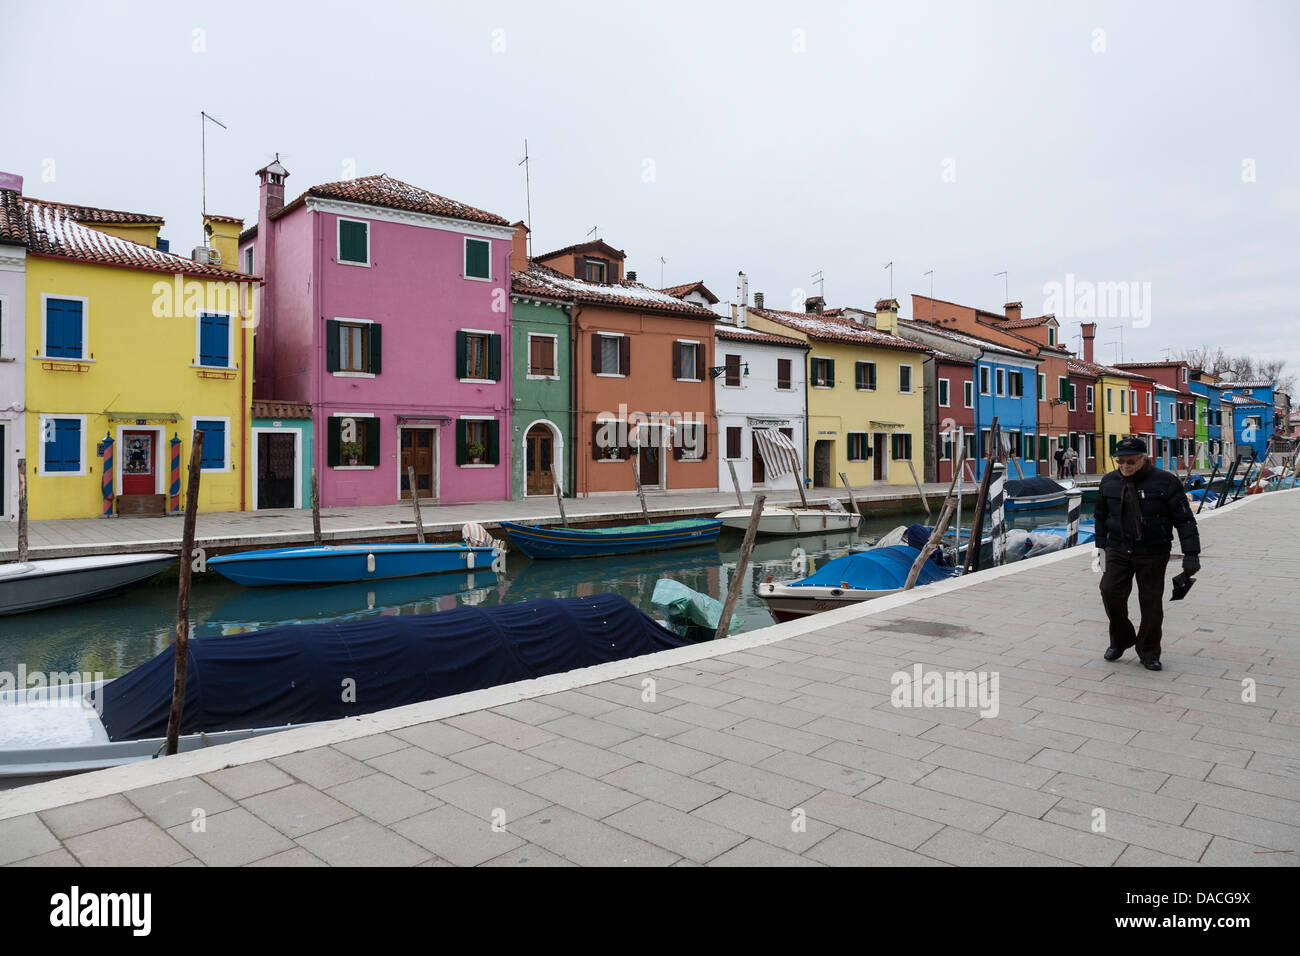 Colorful Buildings and Facades, Burano Island, Venice, Italy Stock Photo